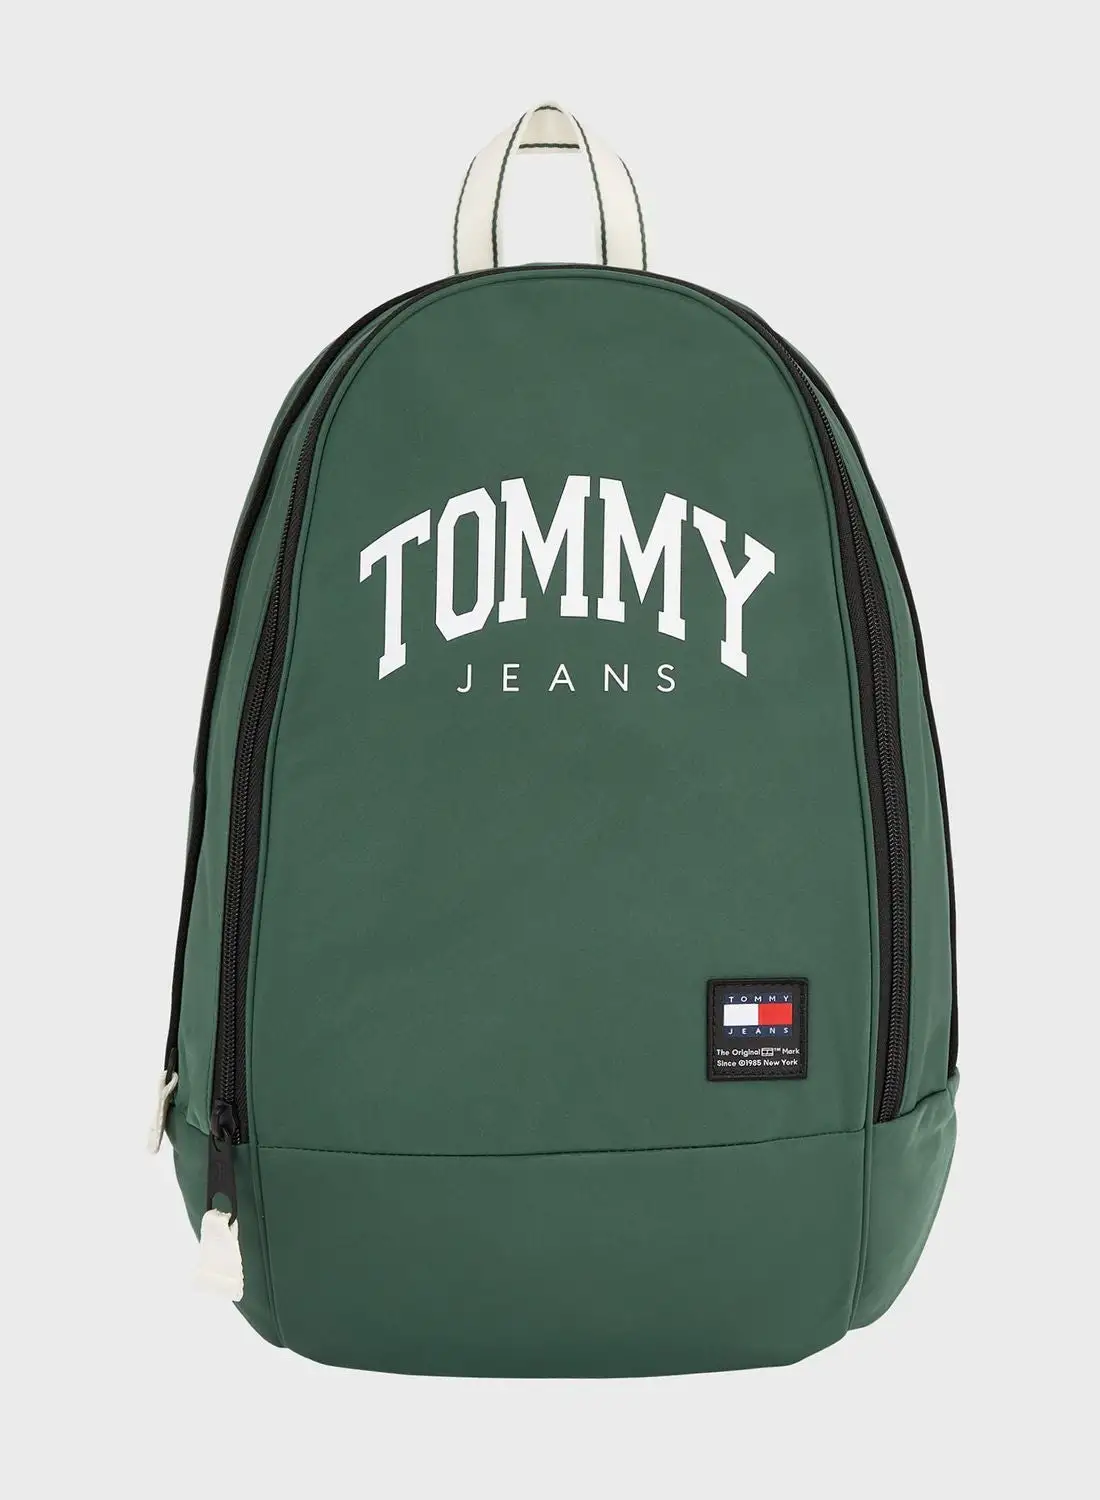 TOMMY JEANS Logo Backpack